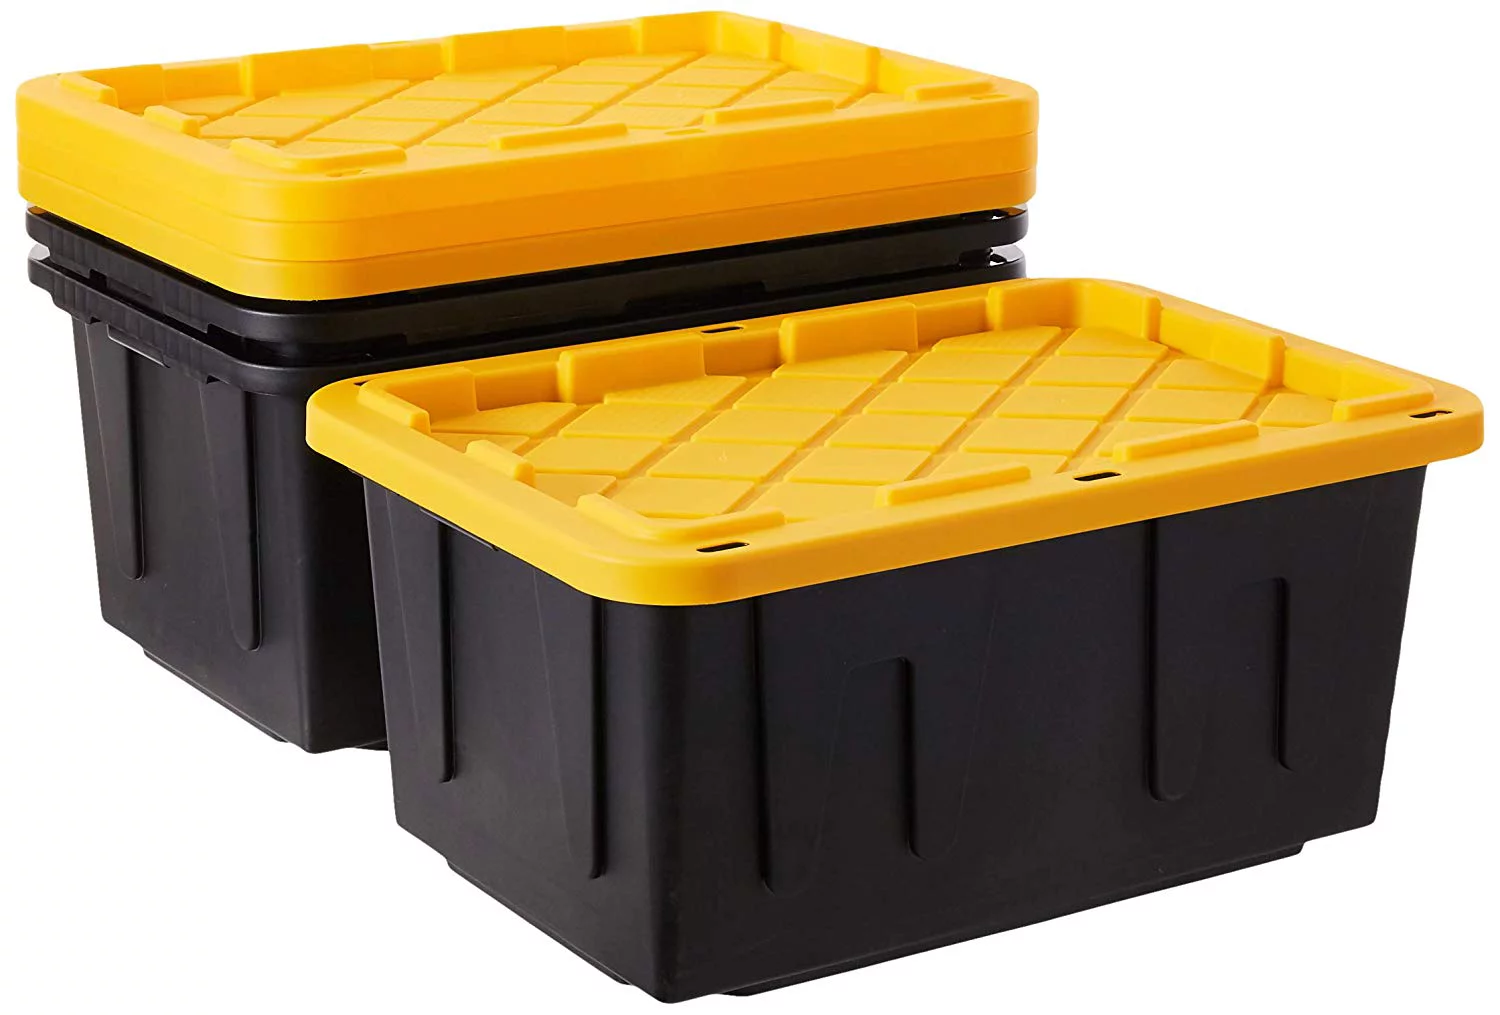 Homz Durabilt 27 Gallon Tough Container, Black and Yellow, Set of 2